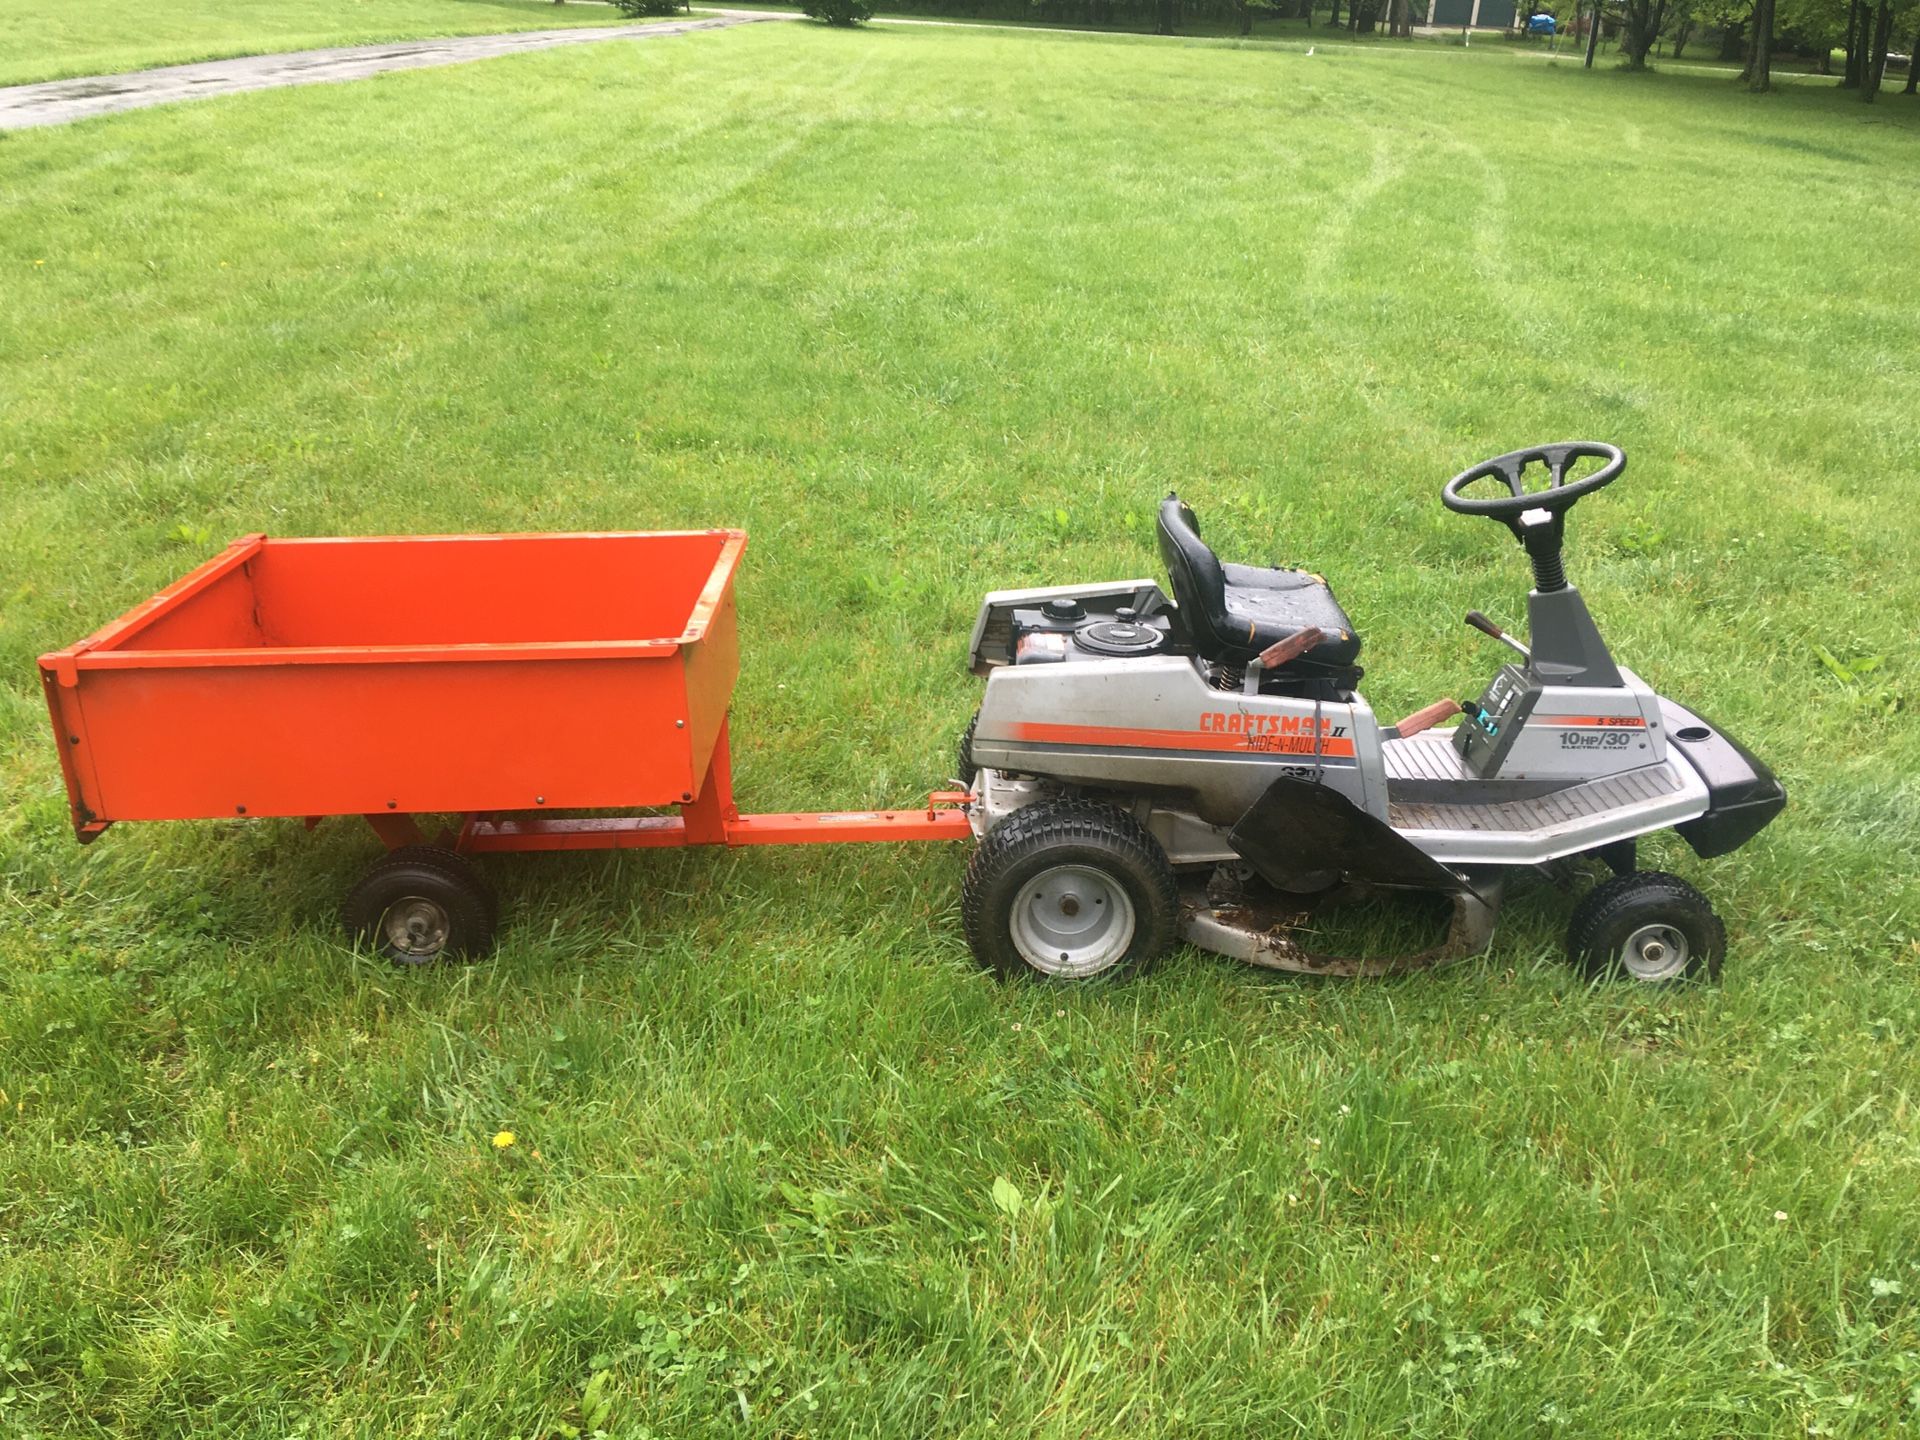 Craftsman 30” Riding Lawn Mower and Yard Dump Cart